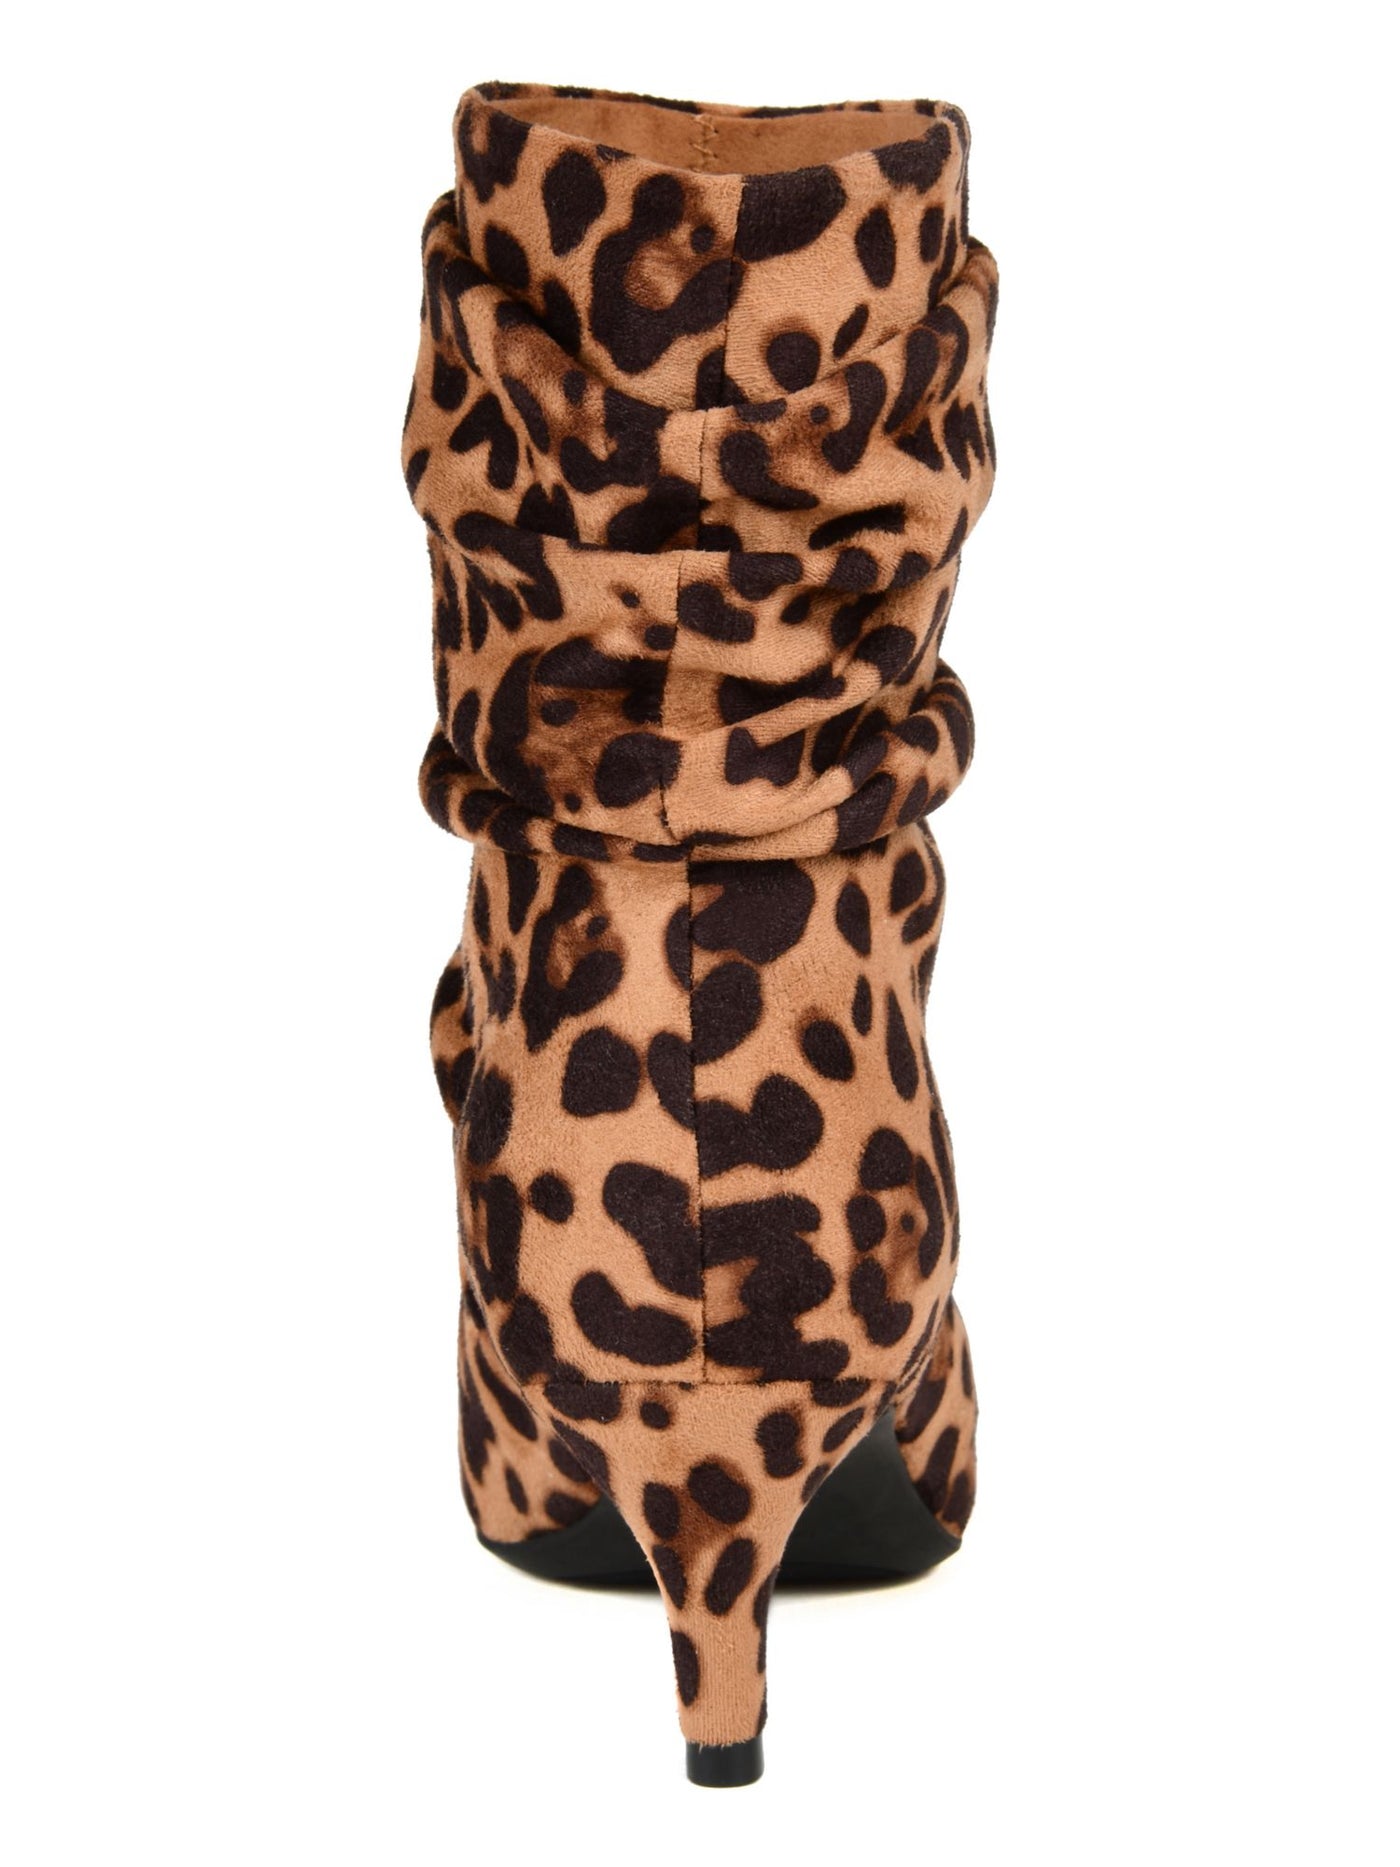 JOURNEE COLLECTION Womens Beige Leopard Print Comfort Jo Pointed Toe Kitten Heel Slip On Slouch Boot 9